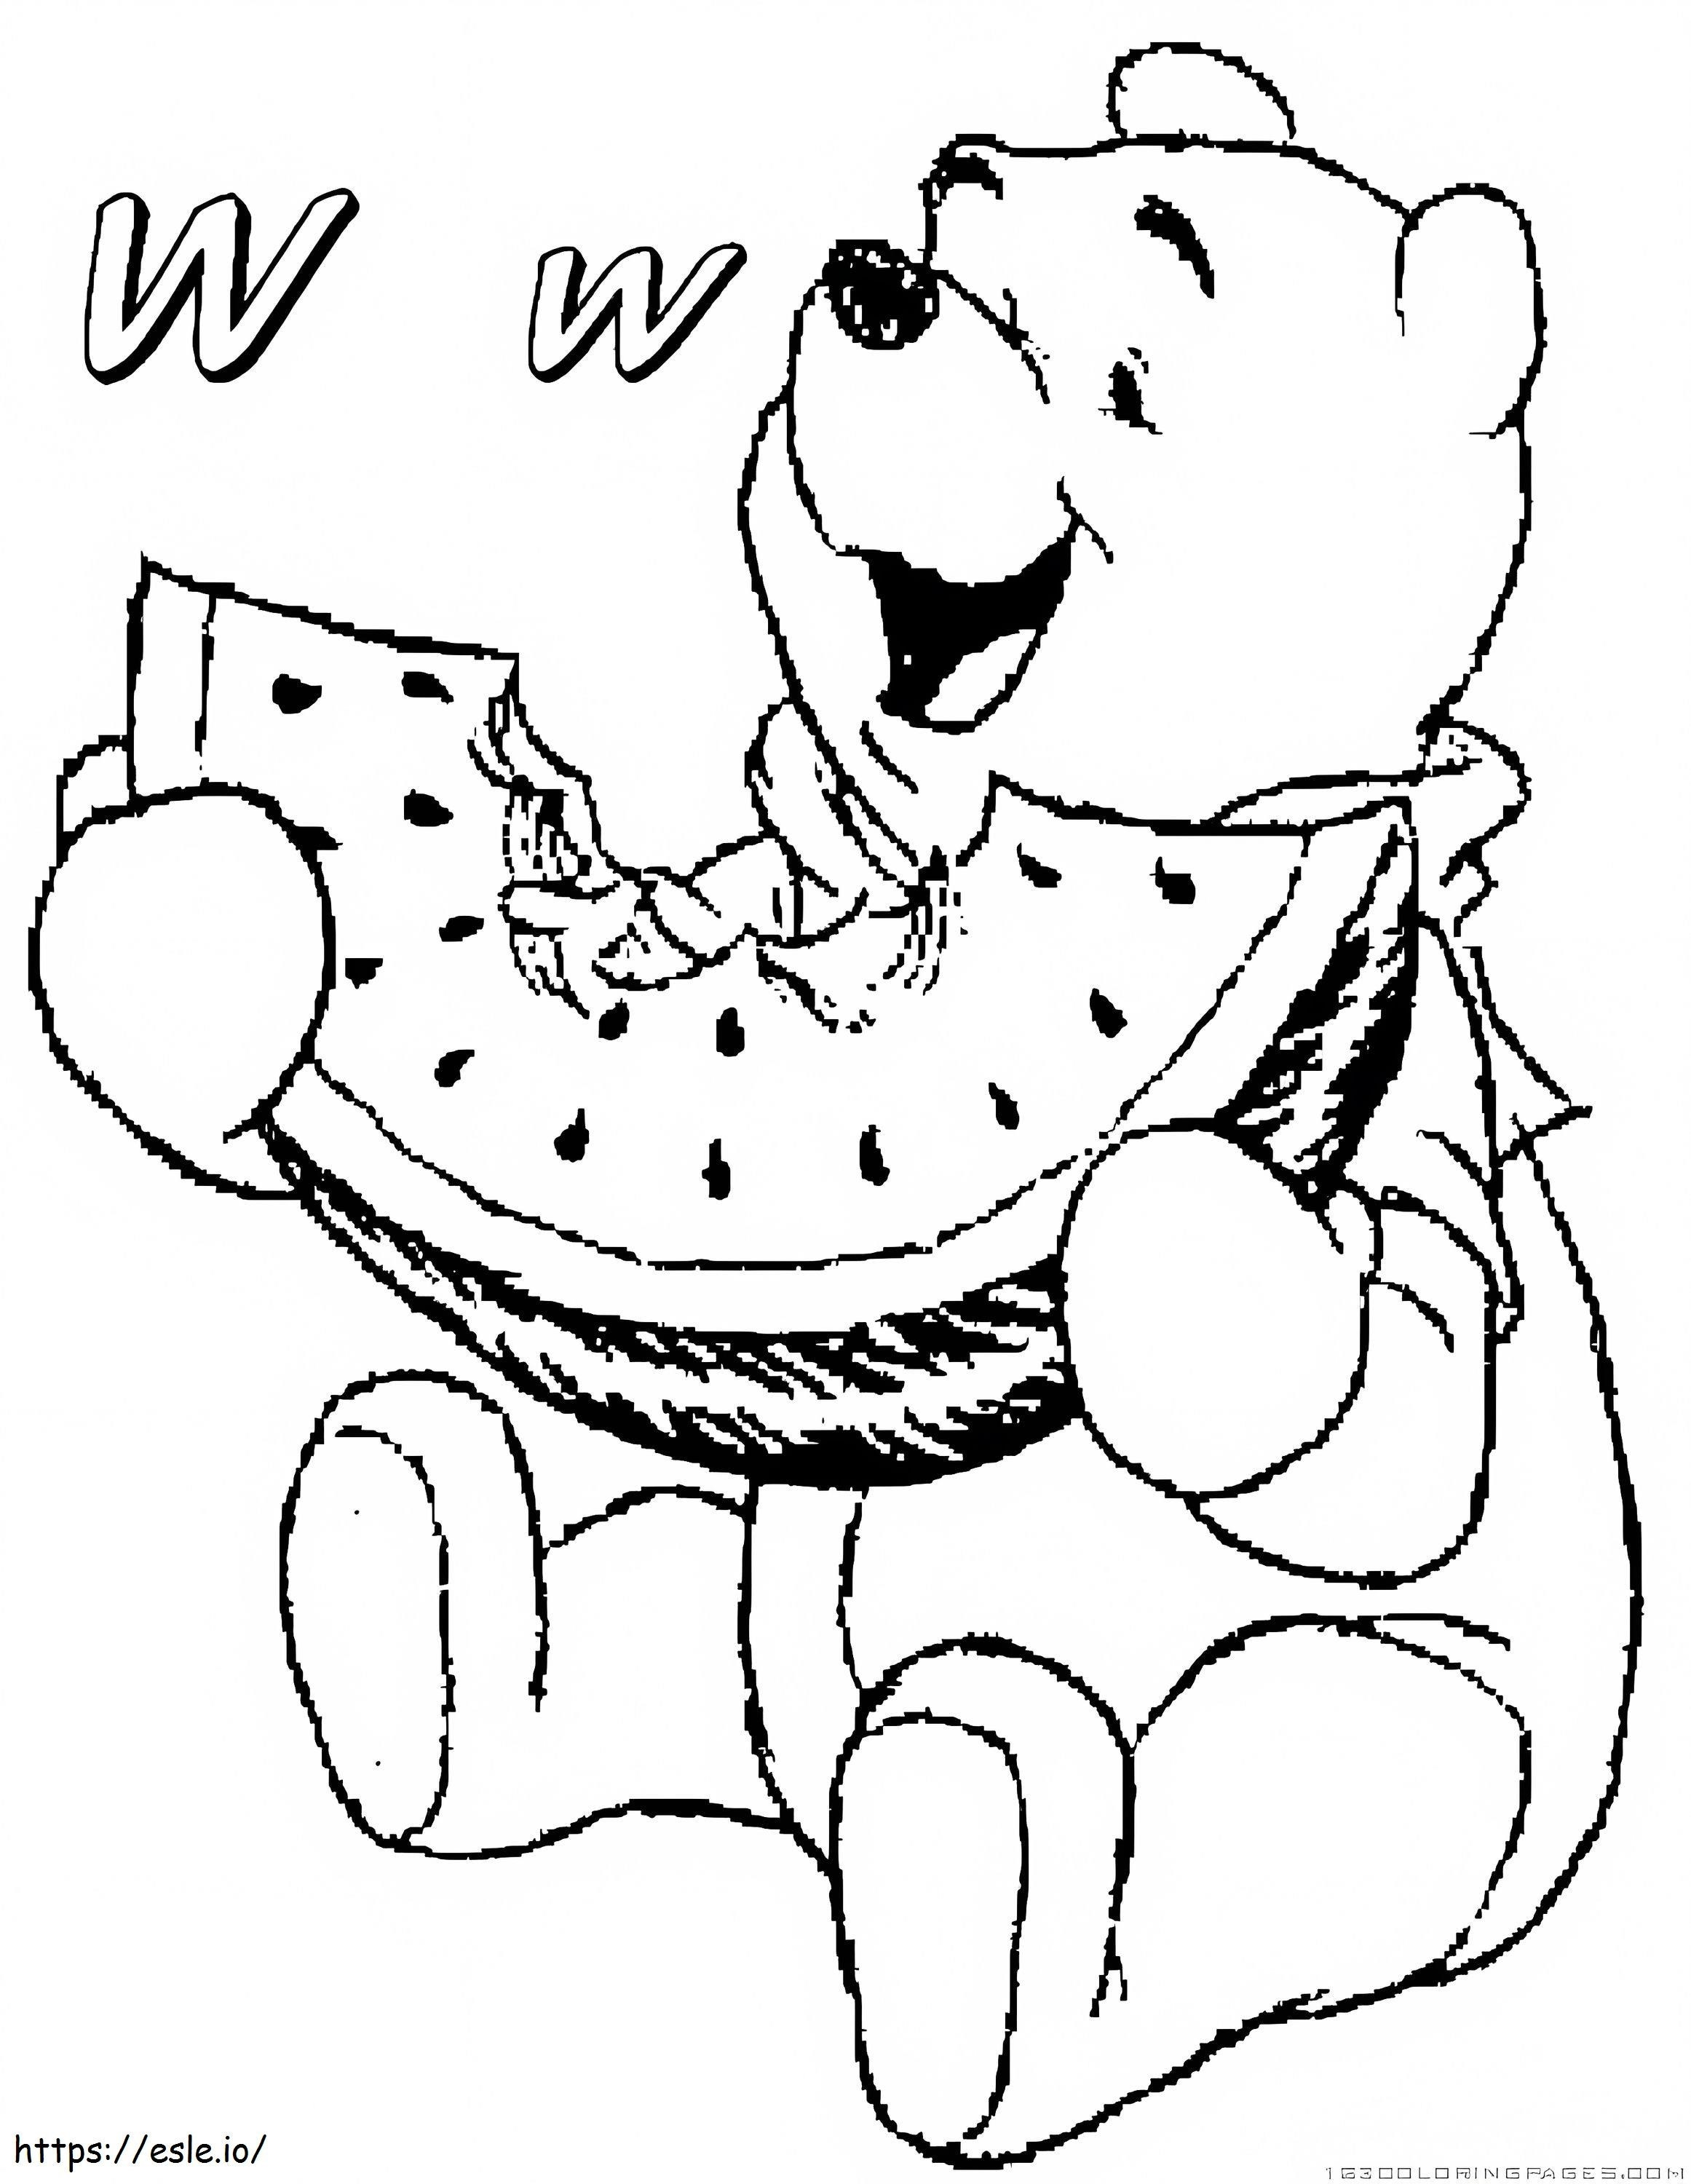 Pooh Bär isst Wassermelone ausmalbilder